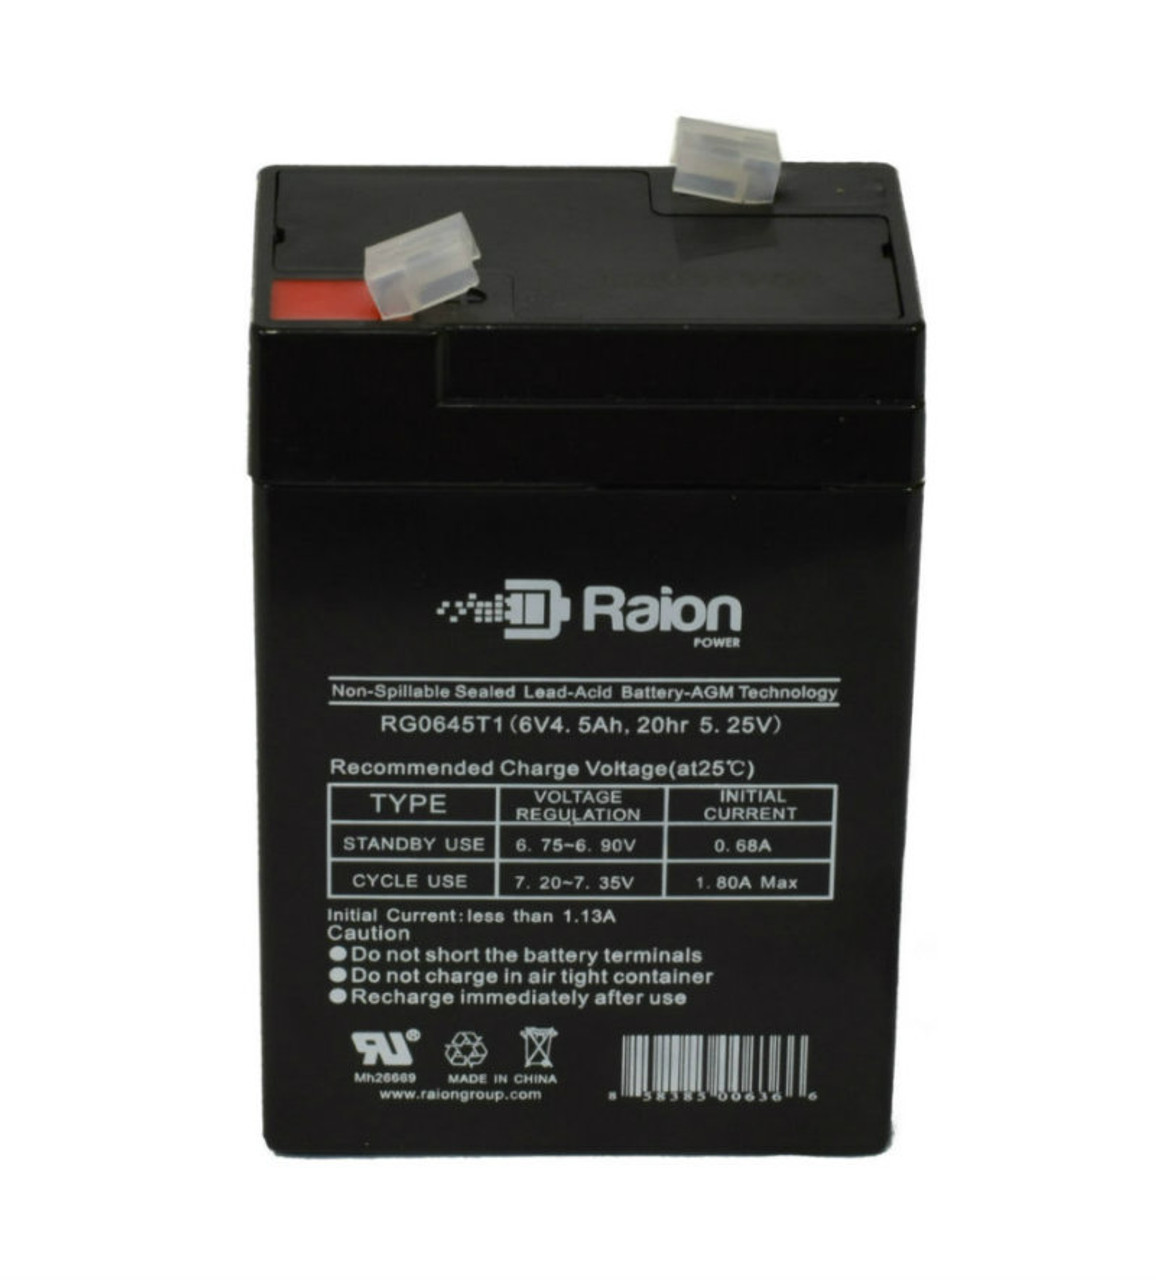 Raion Power RG0645T1 Replacement Battery Cartridge for Koyosonic NP5-6